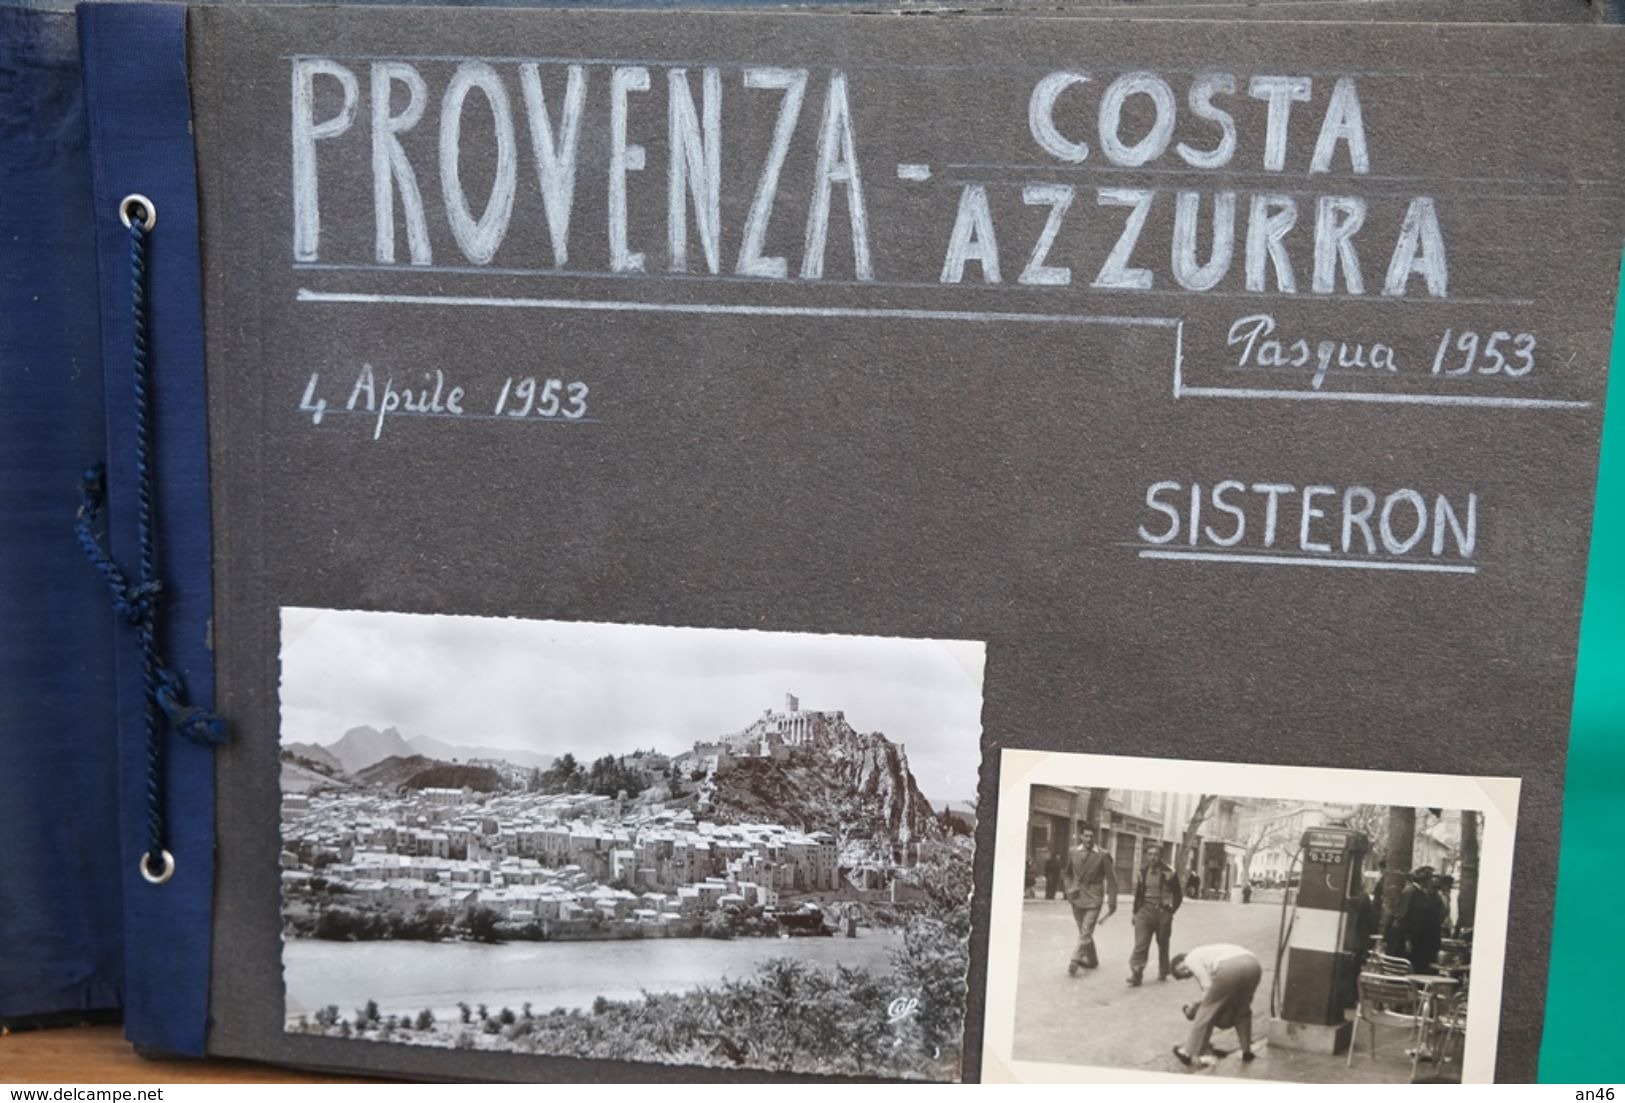 ALBUM Della Provenza-Costa Azzurra- 1953-SISTERON_EX En PROVENCE_MARSIGLIA_CASSIS_LA CIOTAT_BANDOL_TOLONE_St TROPEZ .... - Albums & Collections